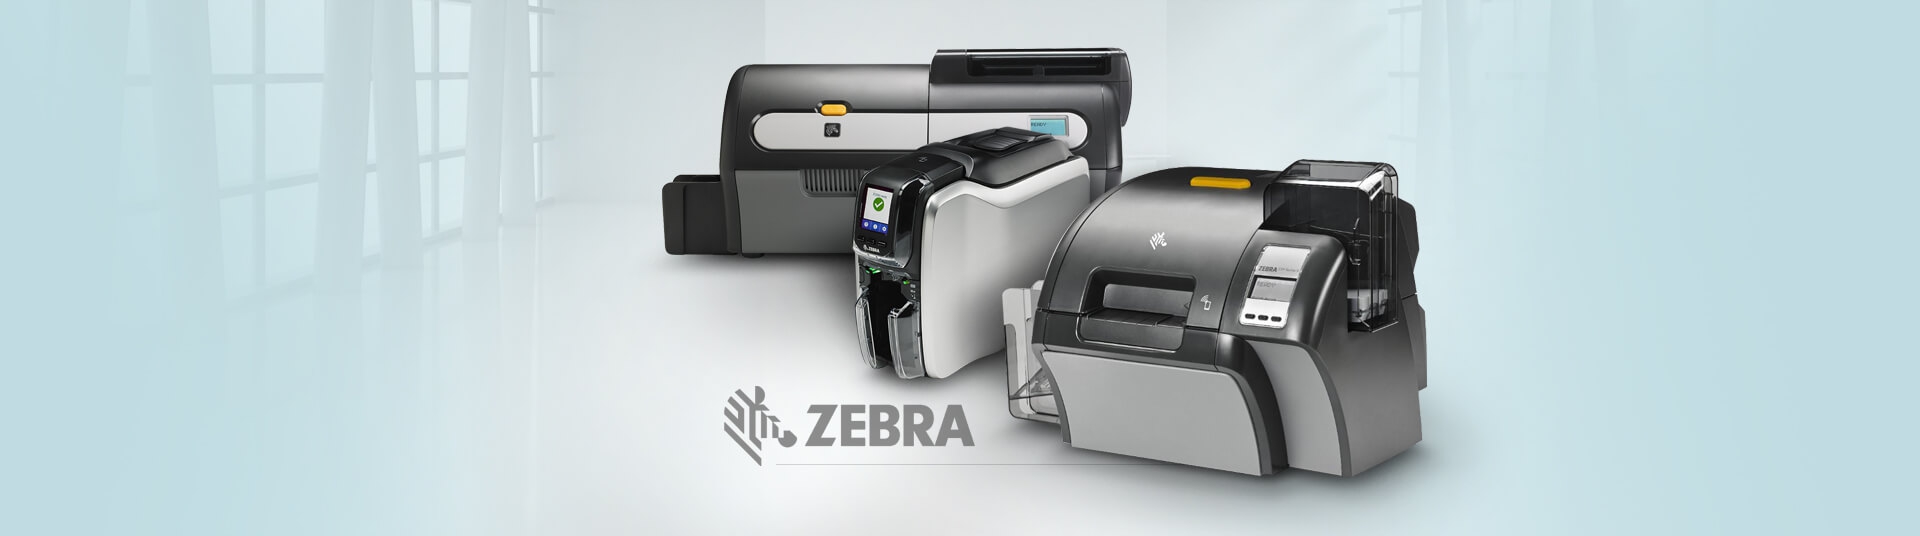 Zebra Photo ID Printers